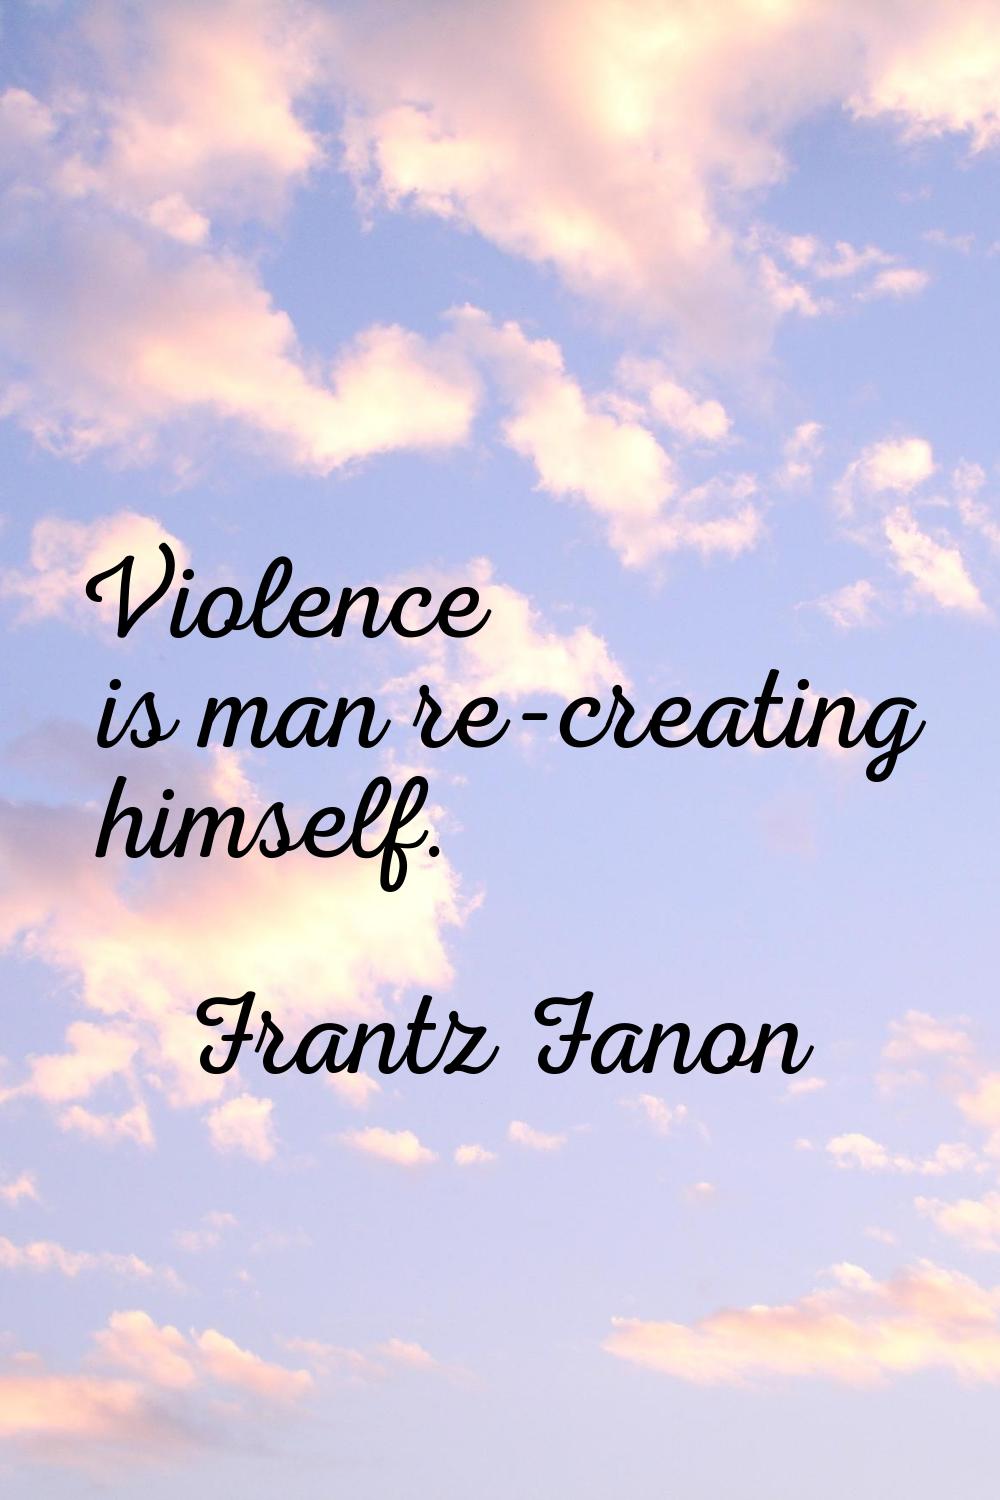 Violence is man re-creating himself.